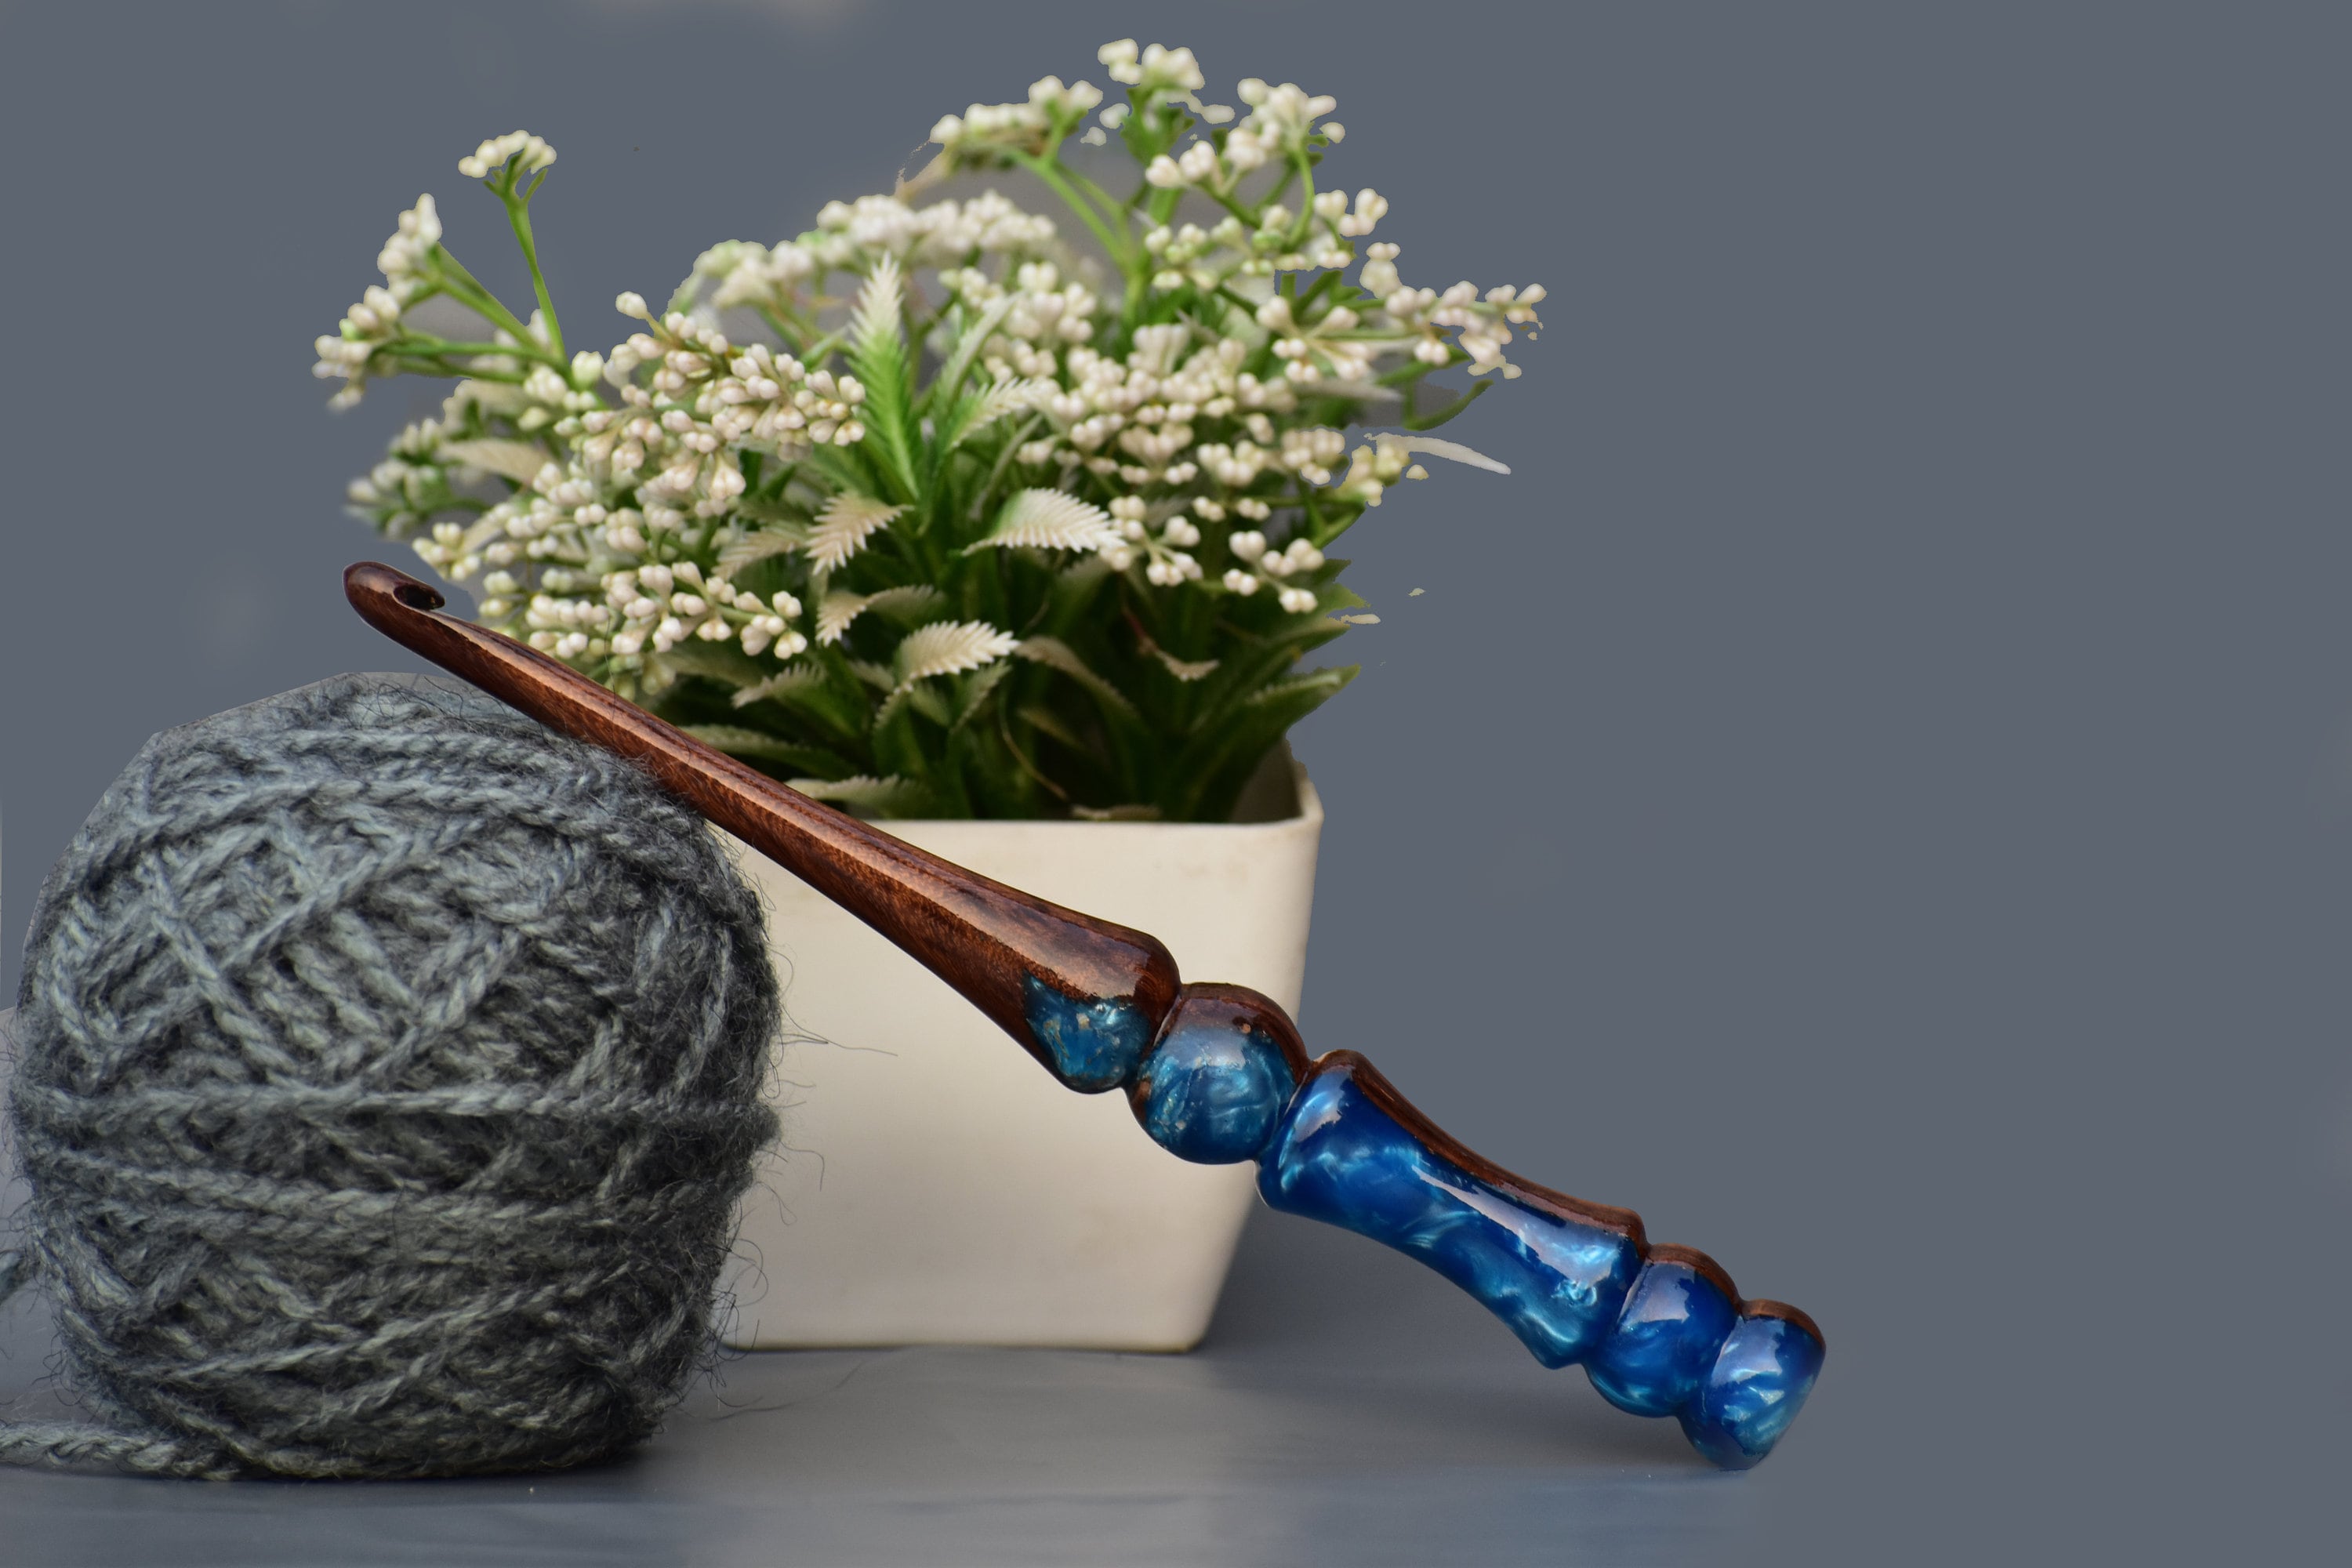 Incraftables Crochet Hook Set with Case 100pcs. Best Crochet Hook